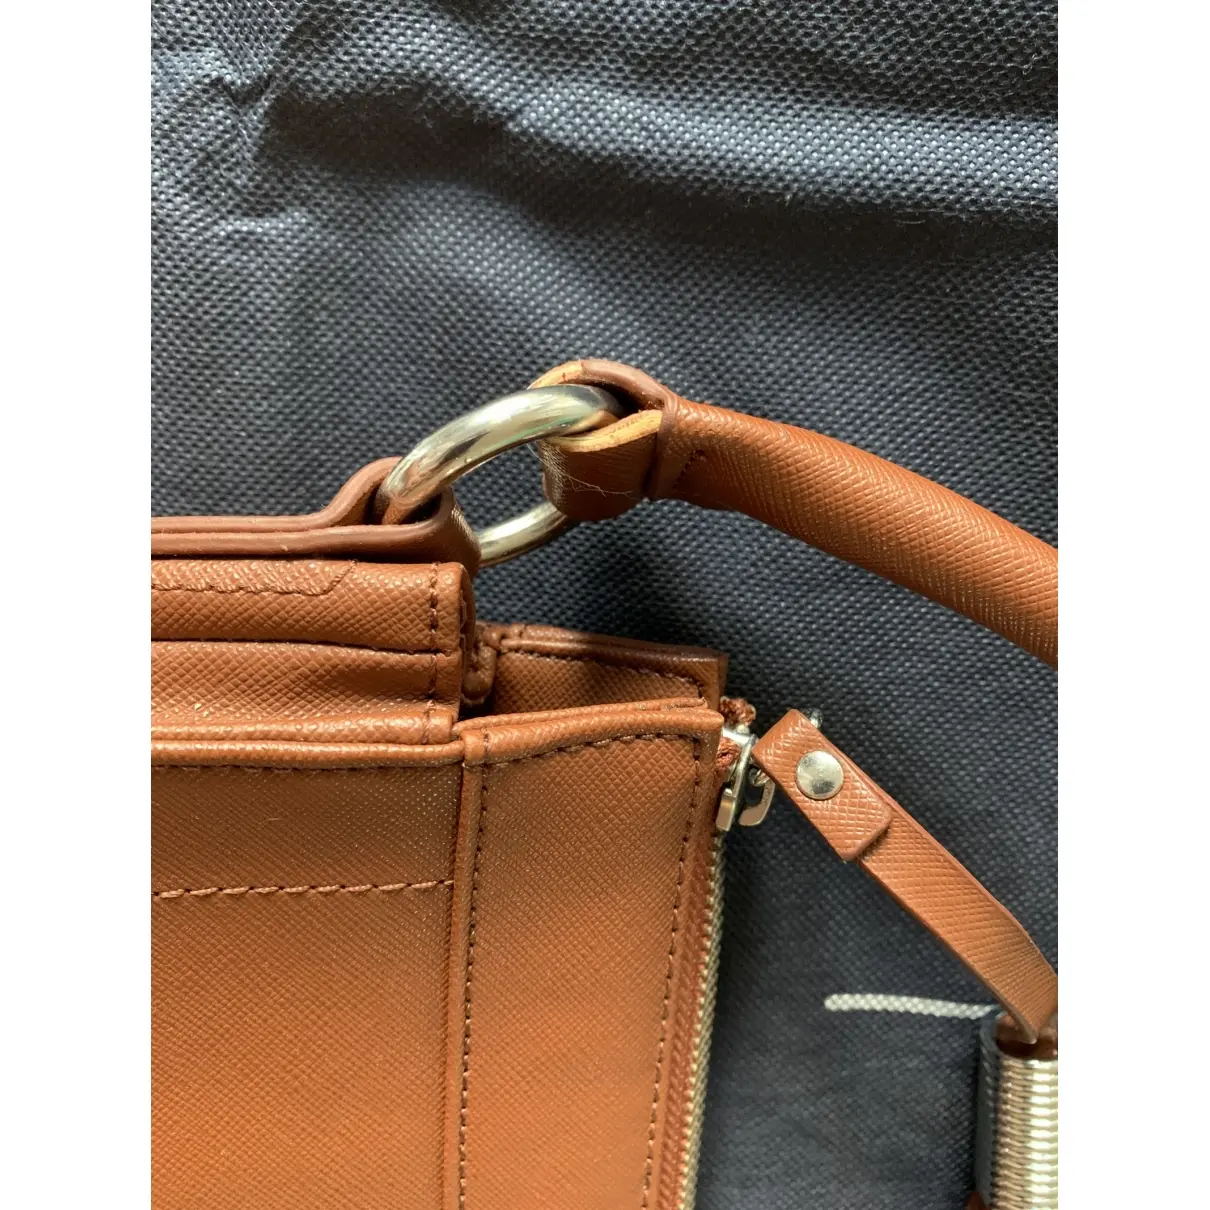 Armani Jeans Handbag for sale